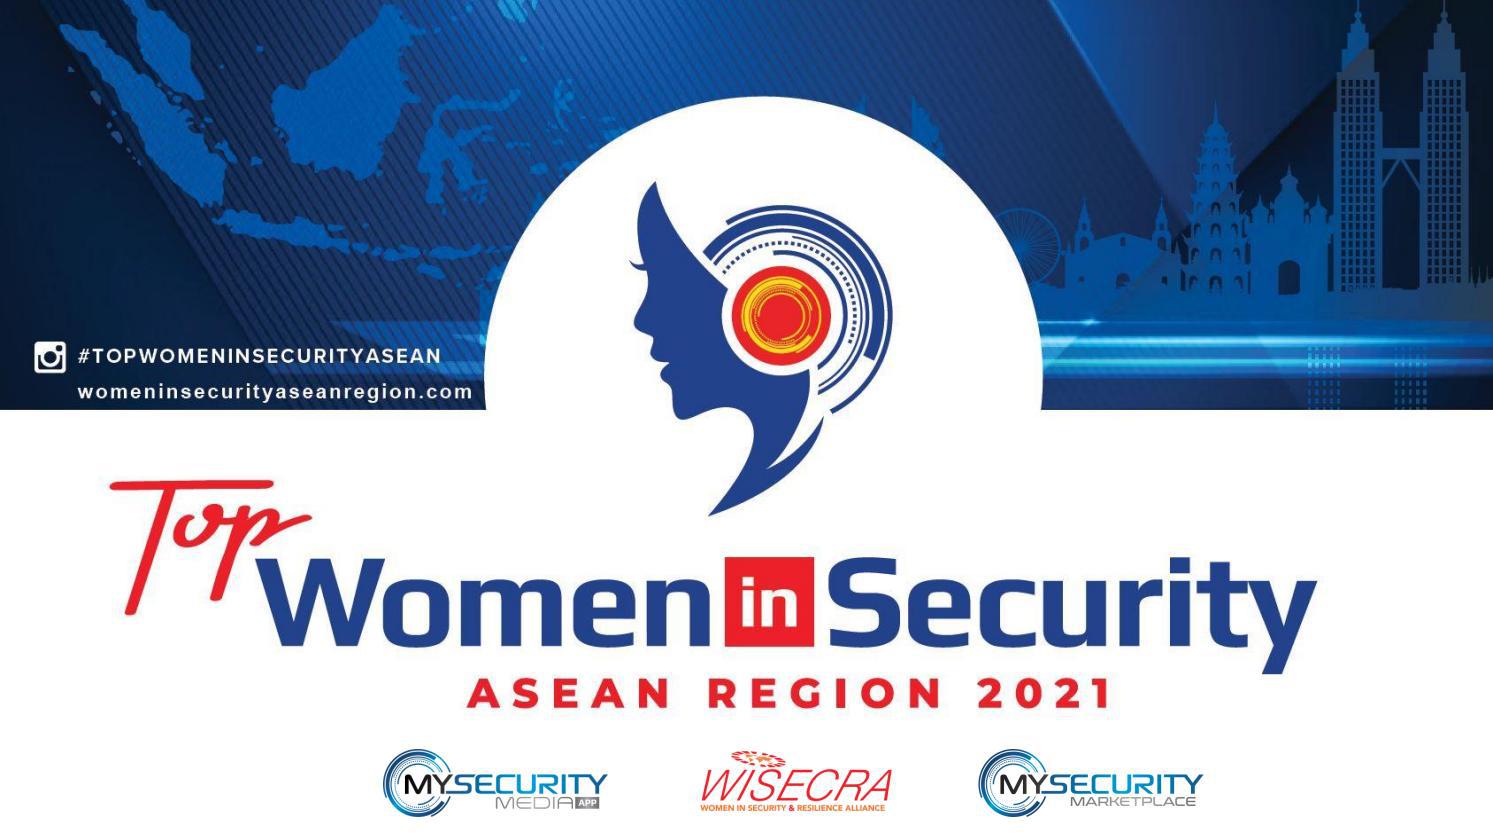   Top Women in Security ASEAN Region 2021